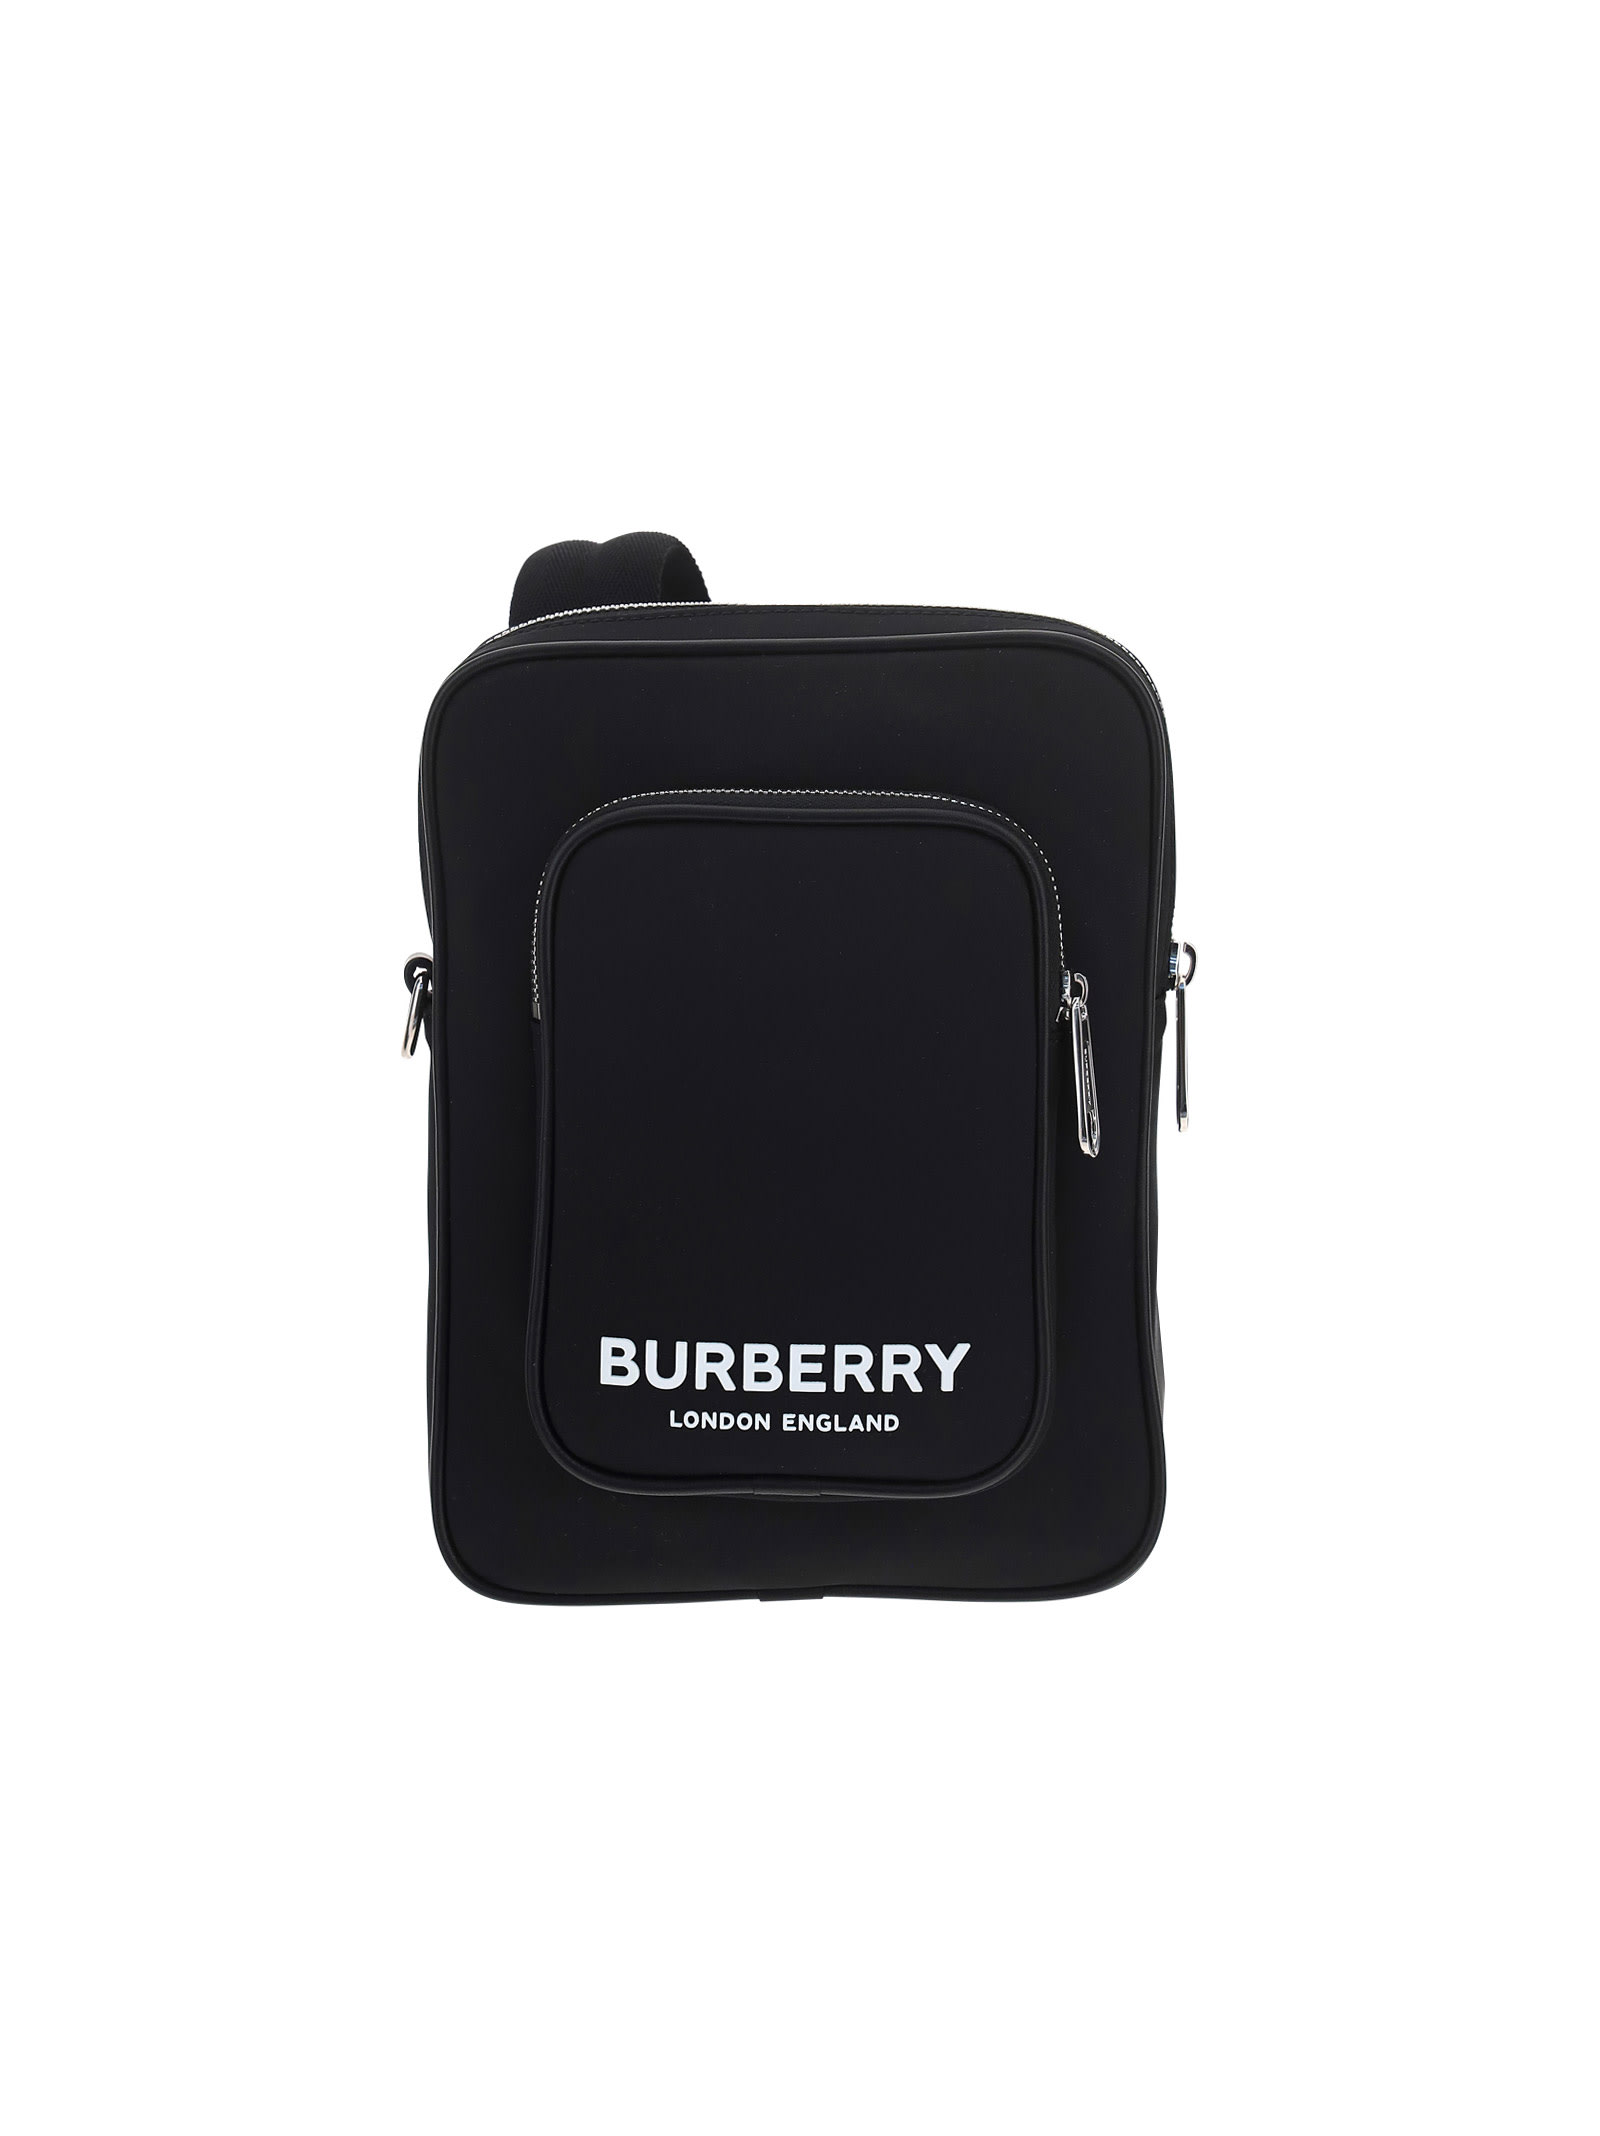 Burberry Kieran Shoulder Bag